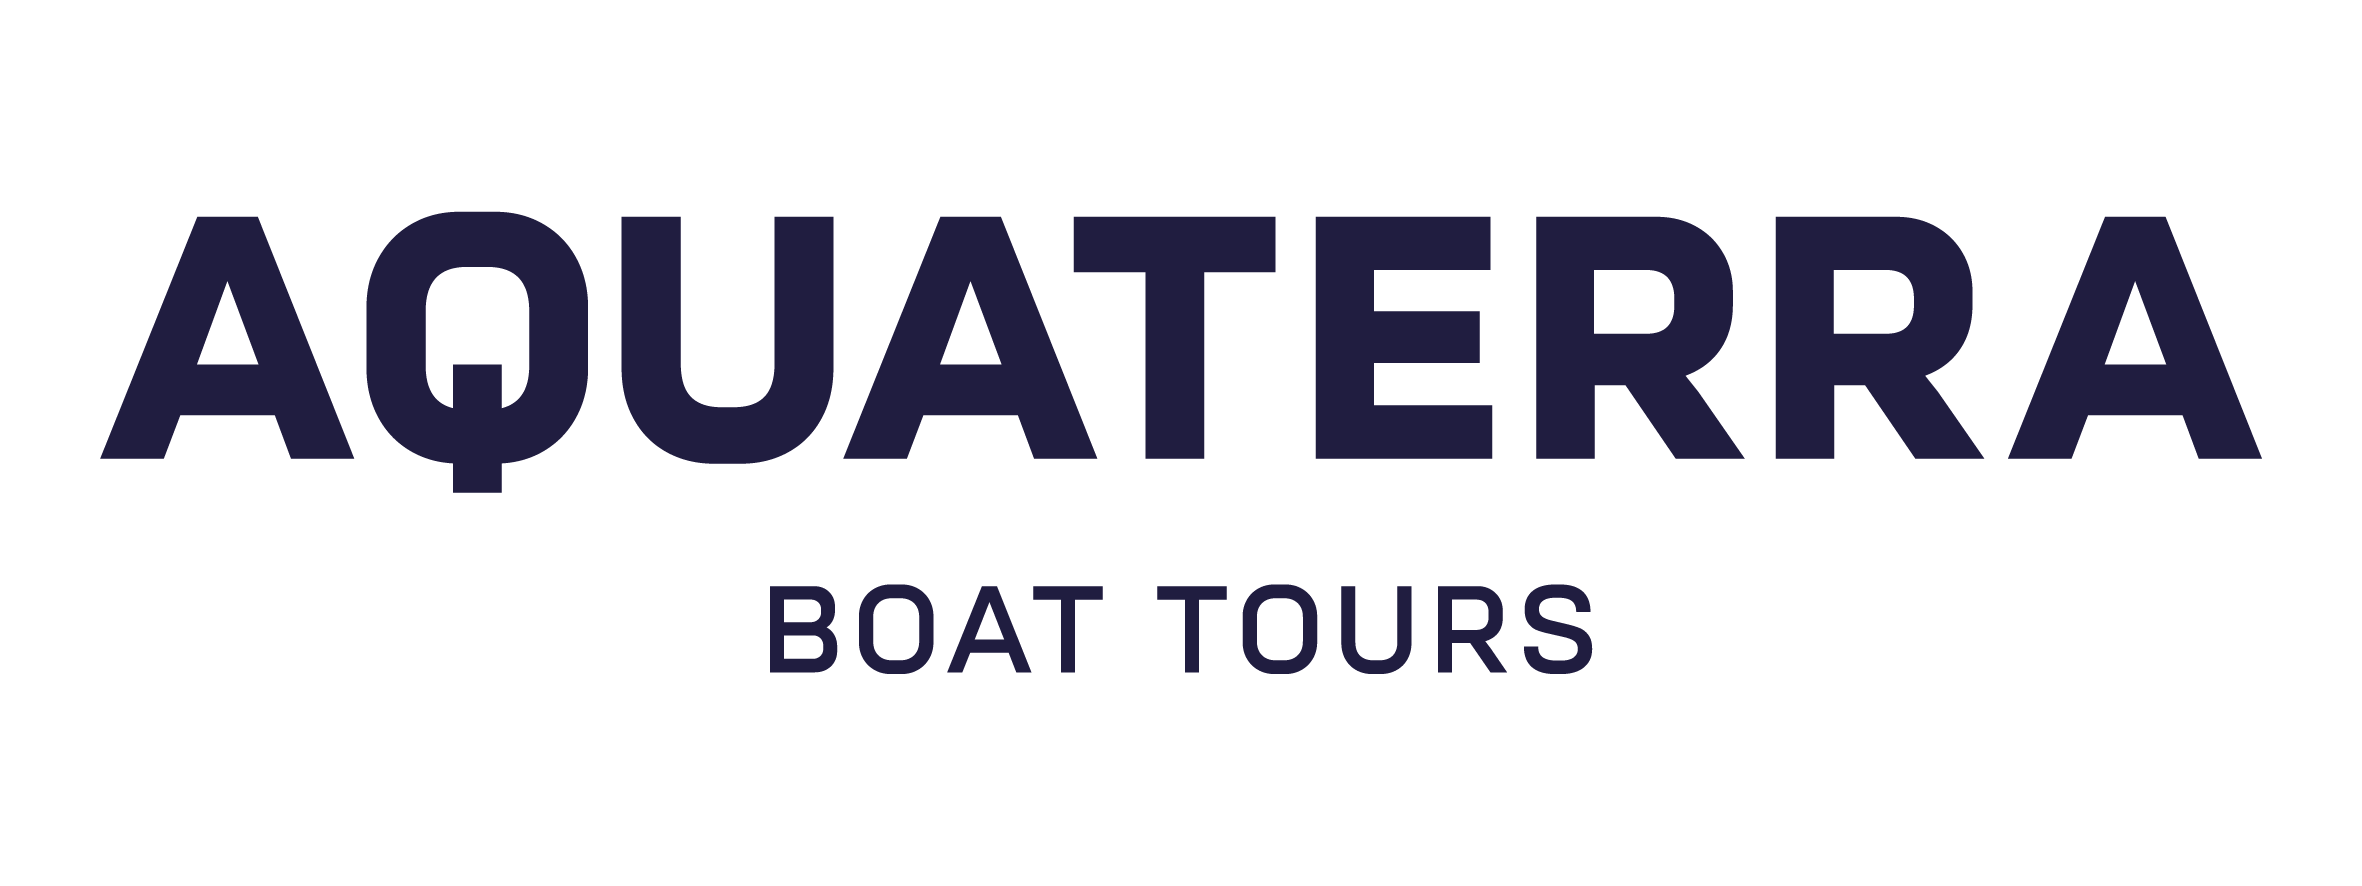 Aquaterra Boat Tours Logo